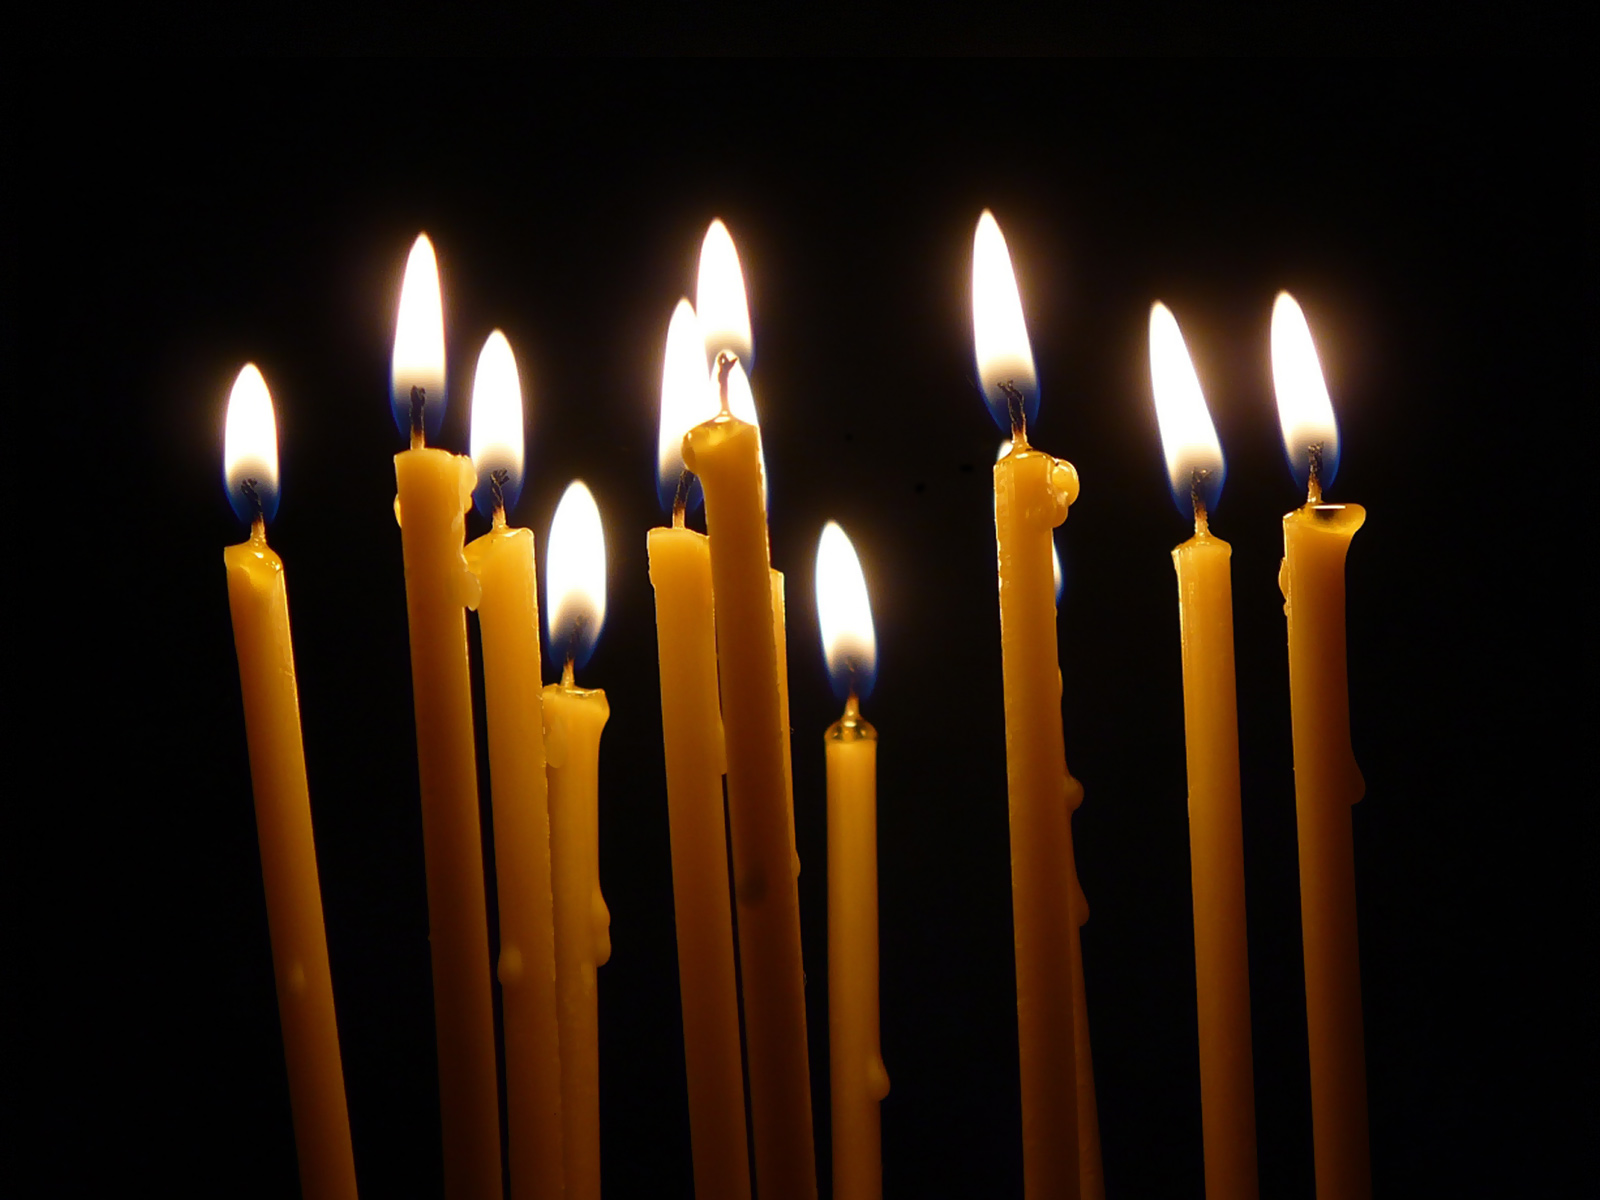 В церкви горят свечи. Церковные свечи. Свечи в храме. Горящие свечи. Горящие свечи в храме.